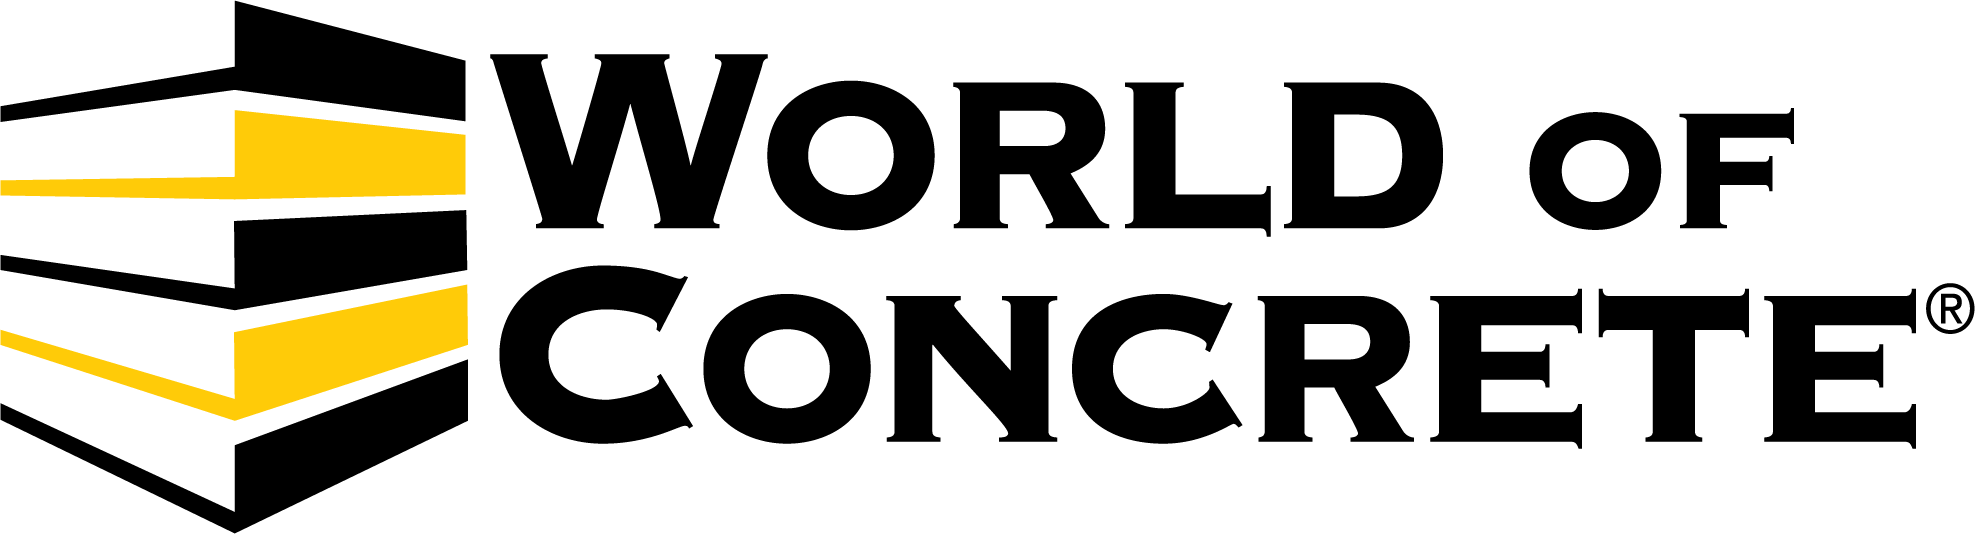 World of Concrete Logo